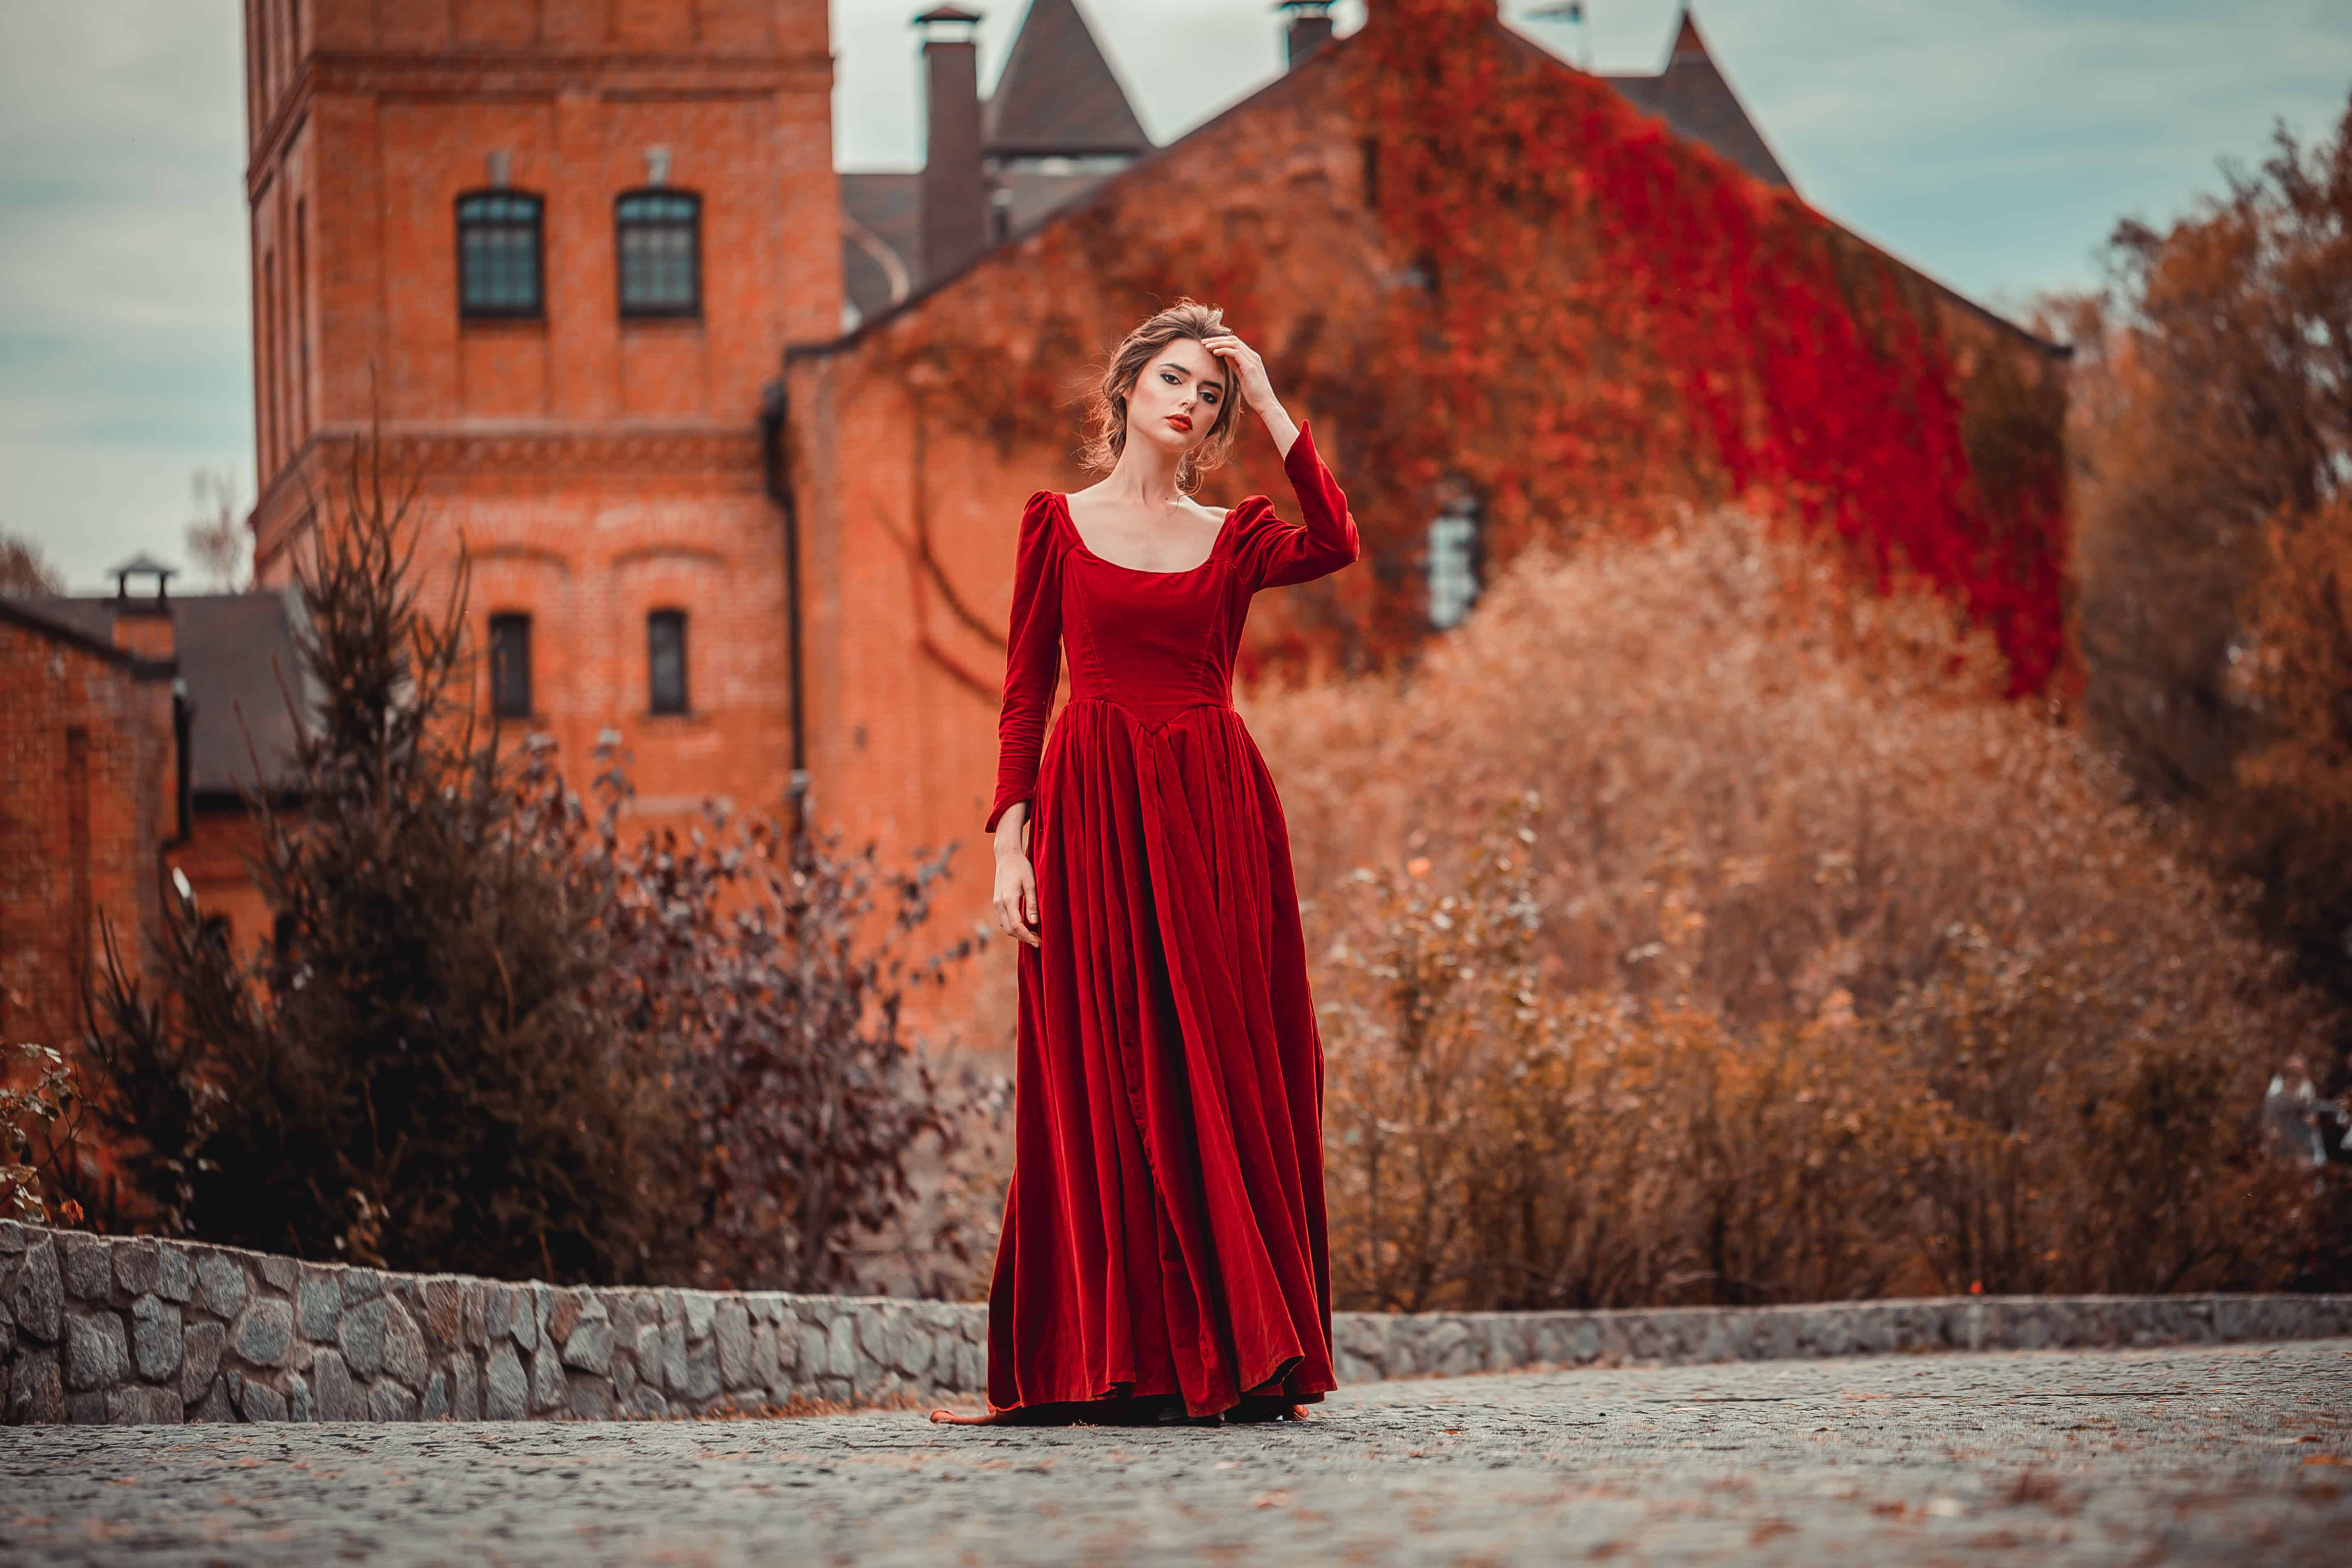 pretty lady in a burgundy red dress walking near an old castle